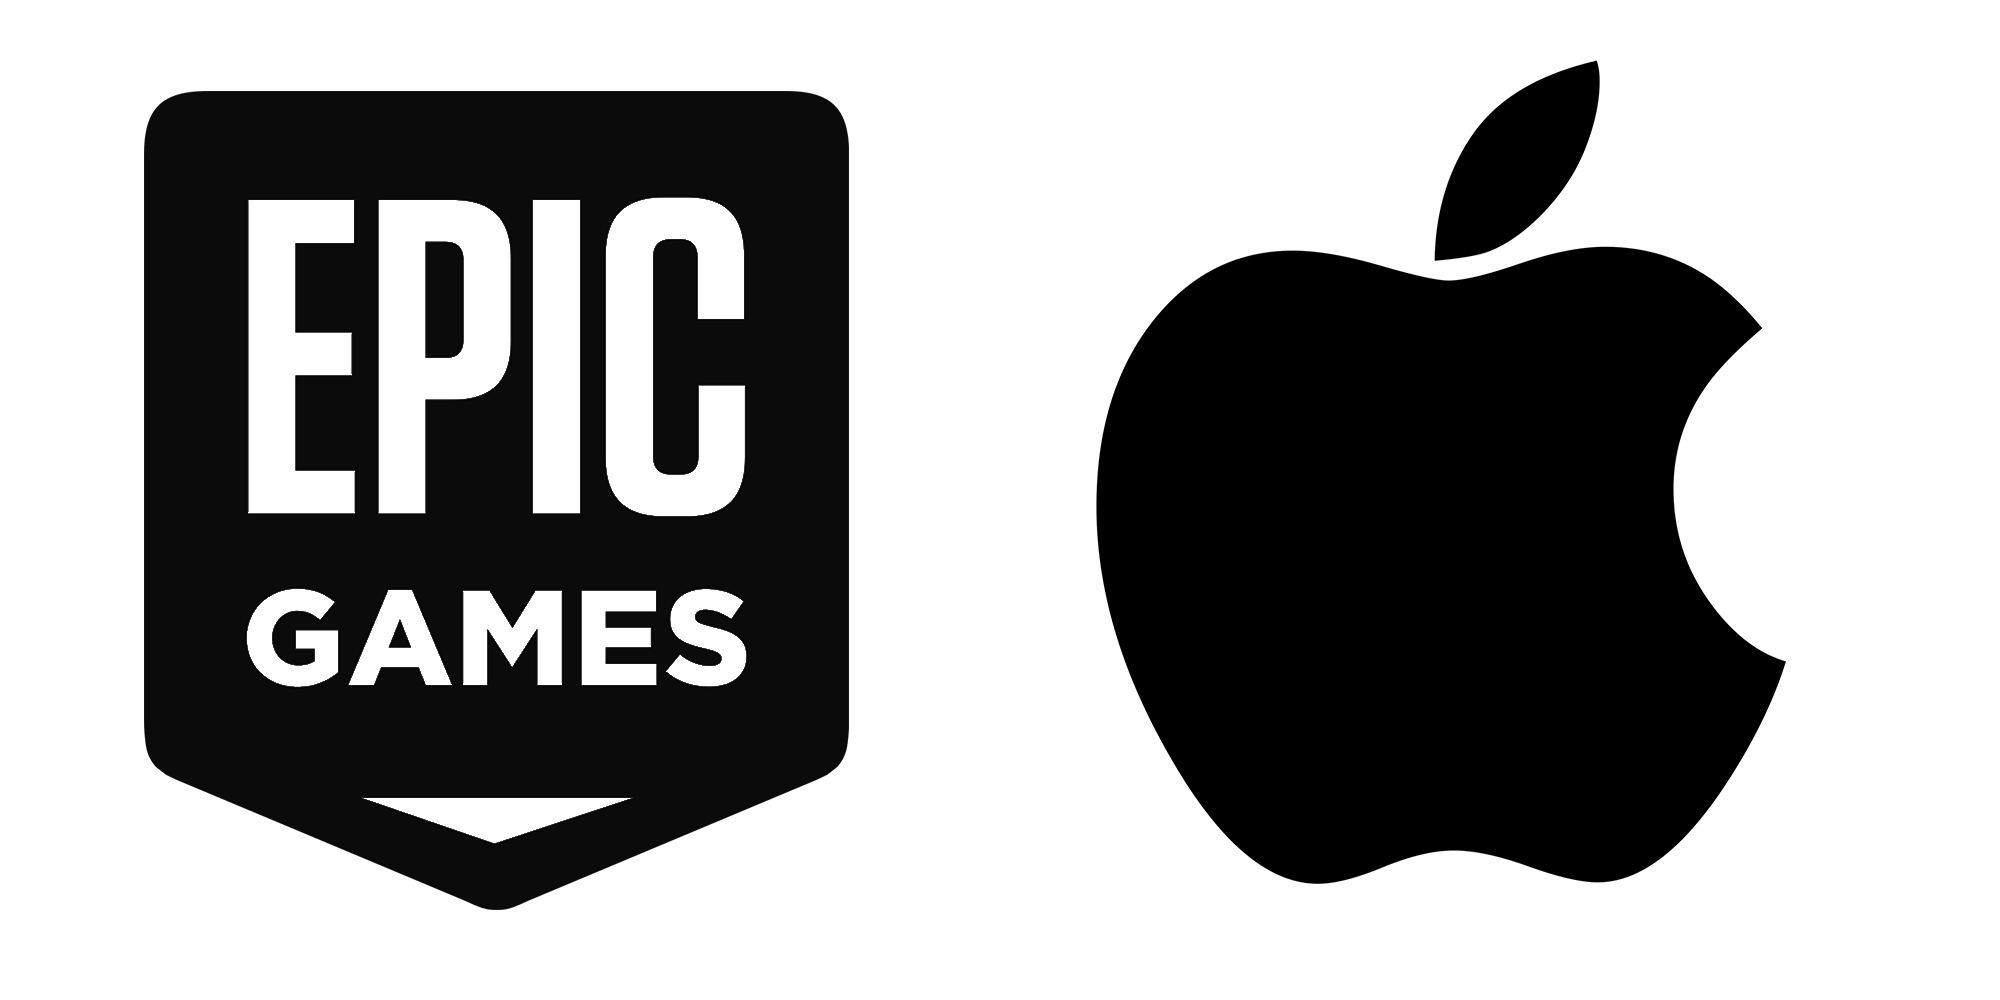 Apple Epic Games